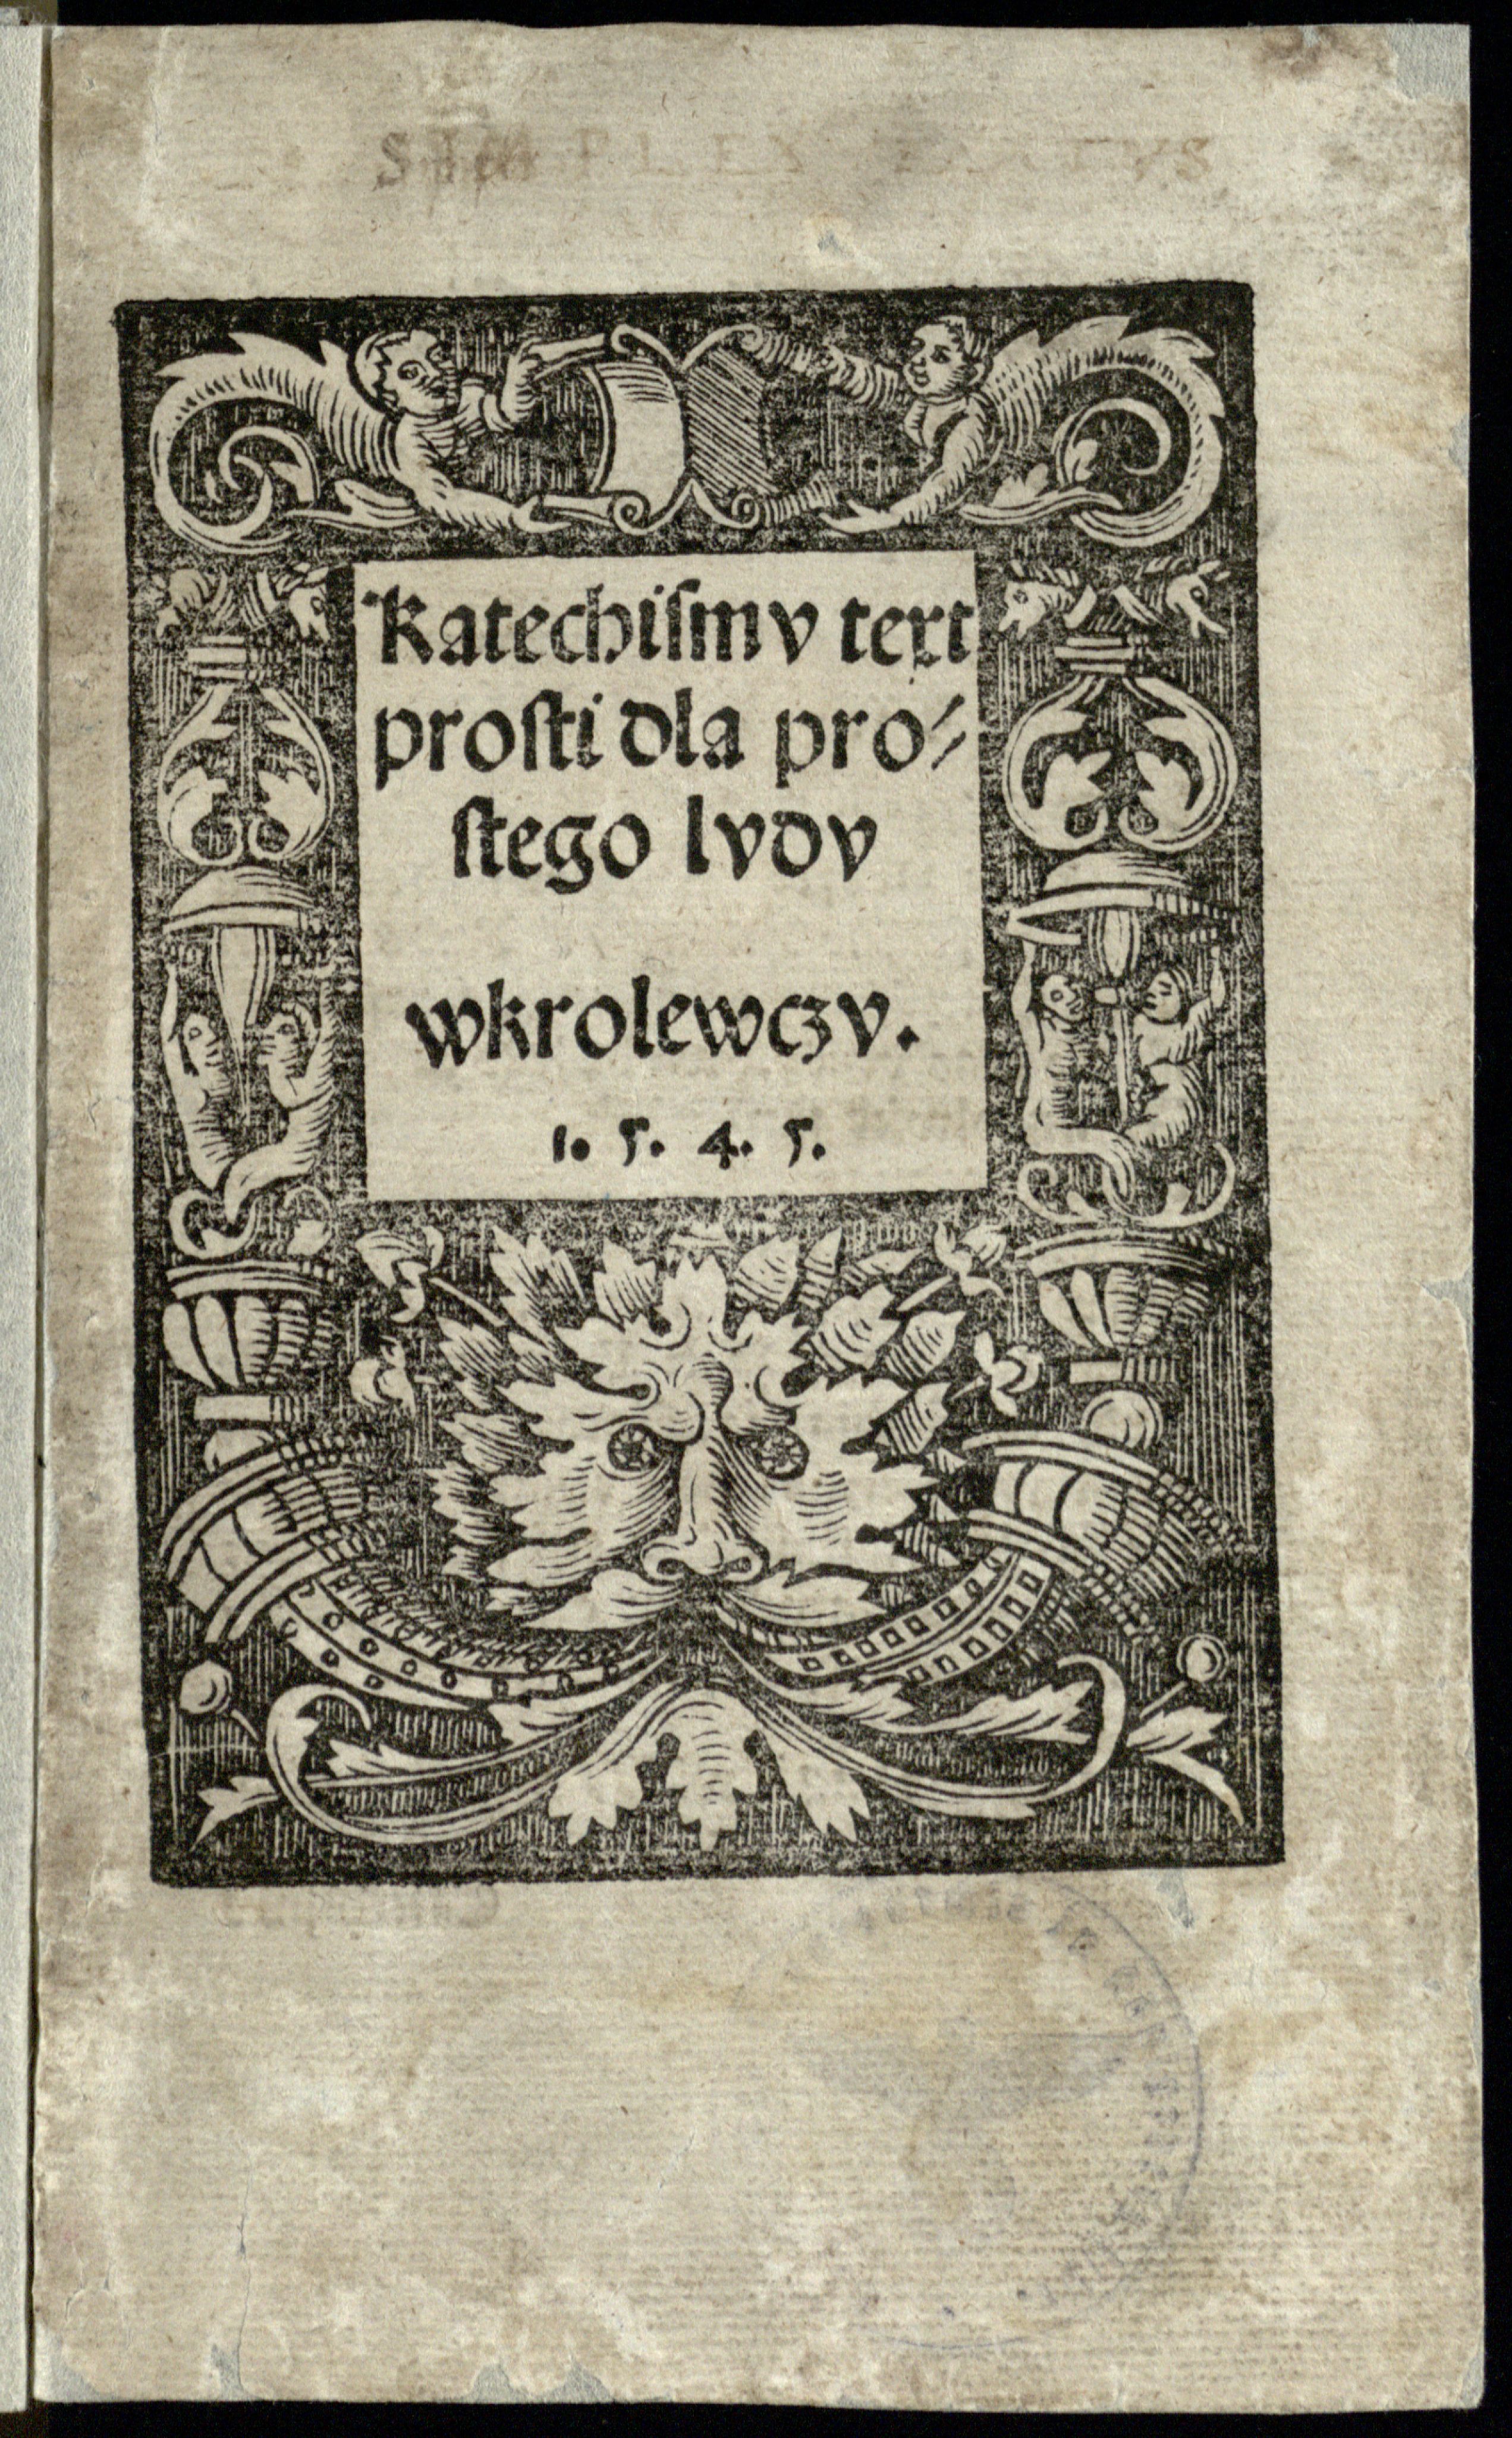 Seklucjan, Jan (apie 1510-1515 – 1578). Katechismu text prosti … (1545)